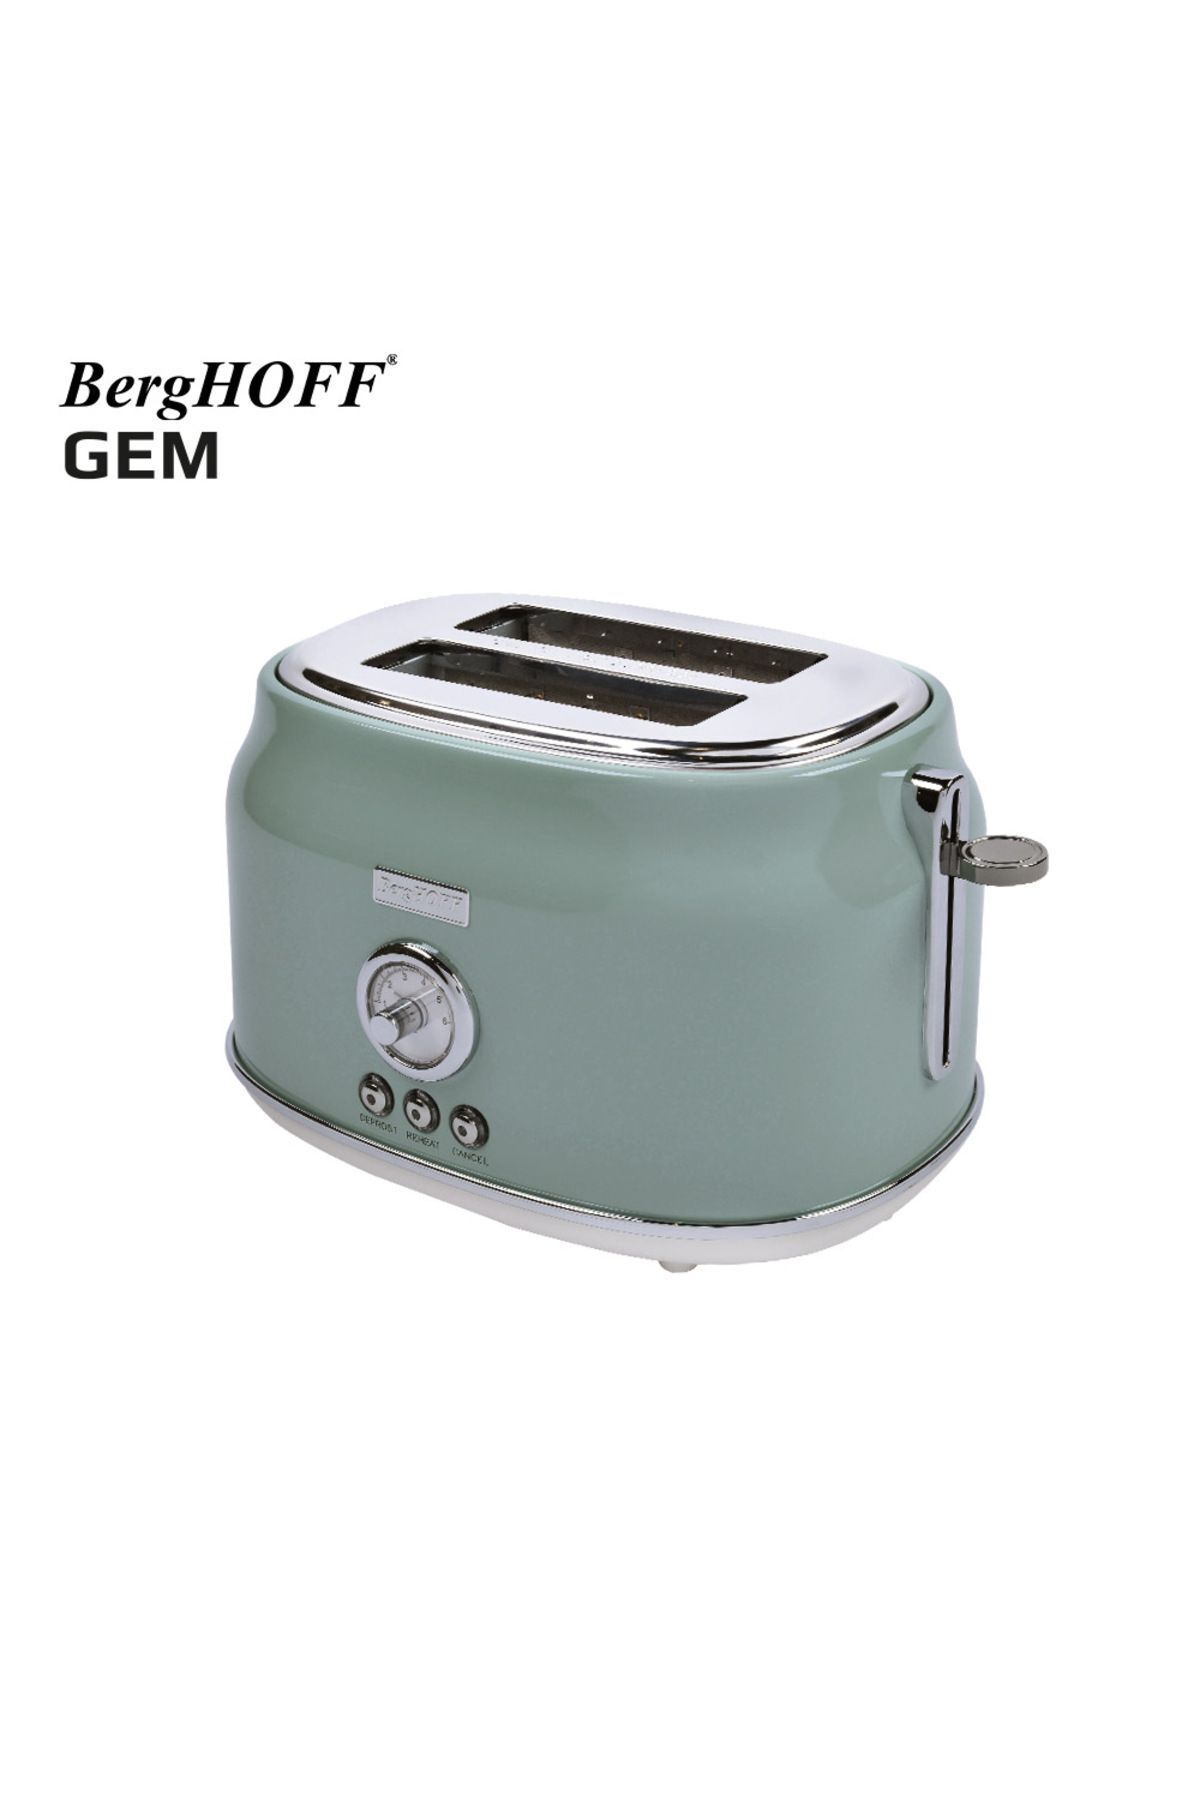 Berghoff GEM RETRO  Mint Yeşil İki Dilim Ekmek Kızartma Makinesi